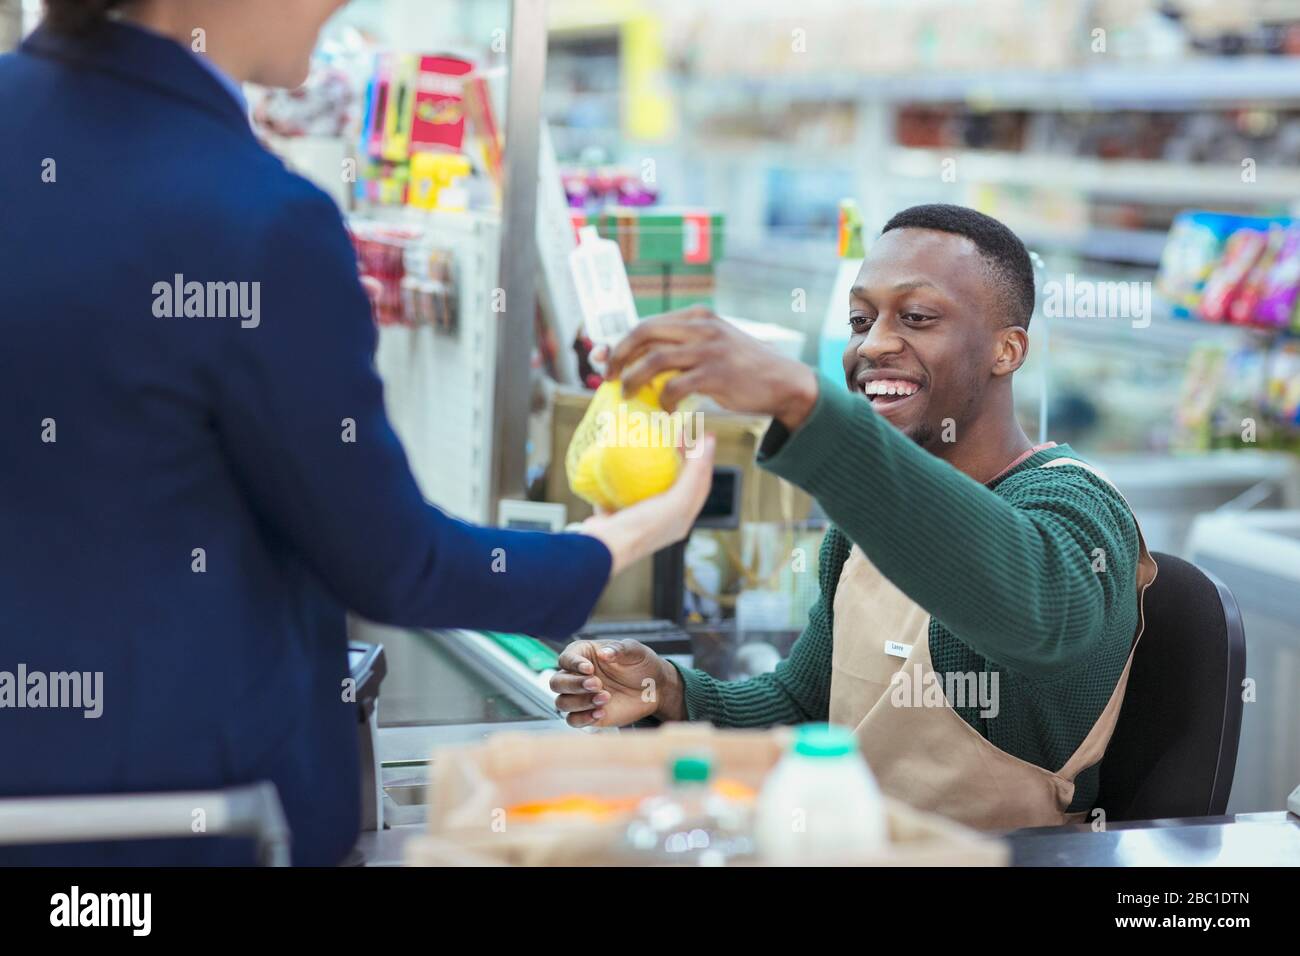 Cashier helping customer at supermarket checkout Stock Photo